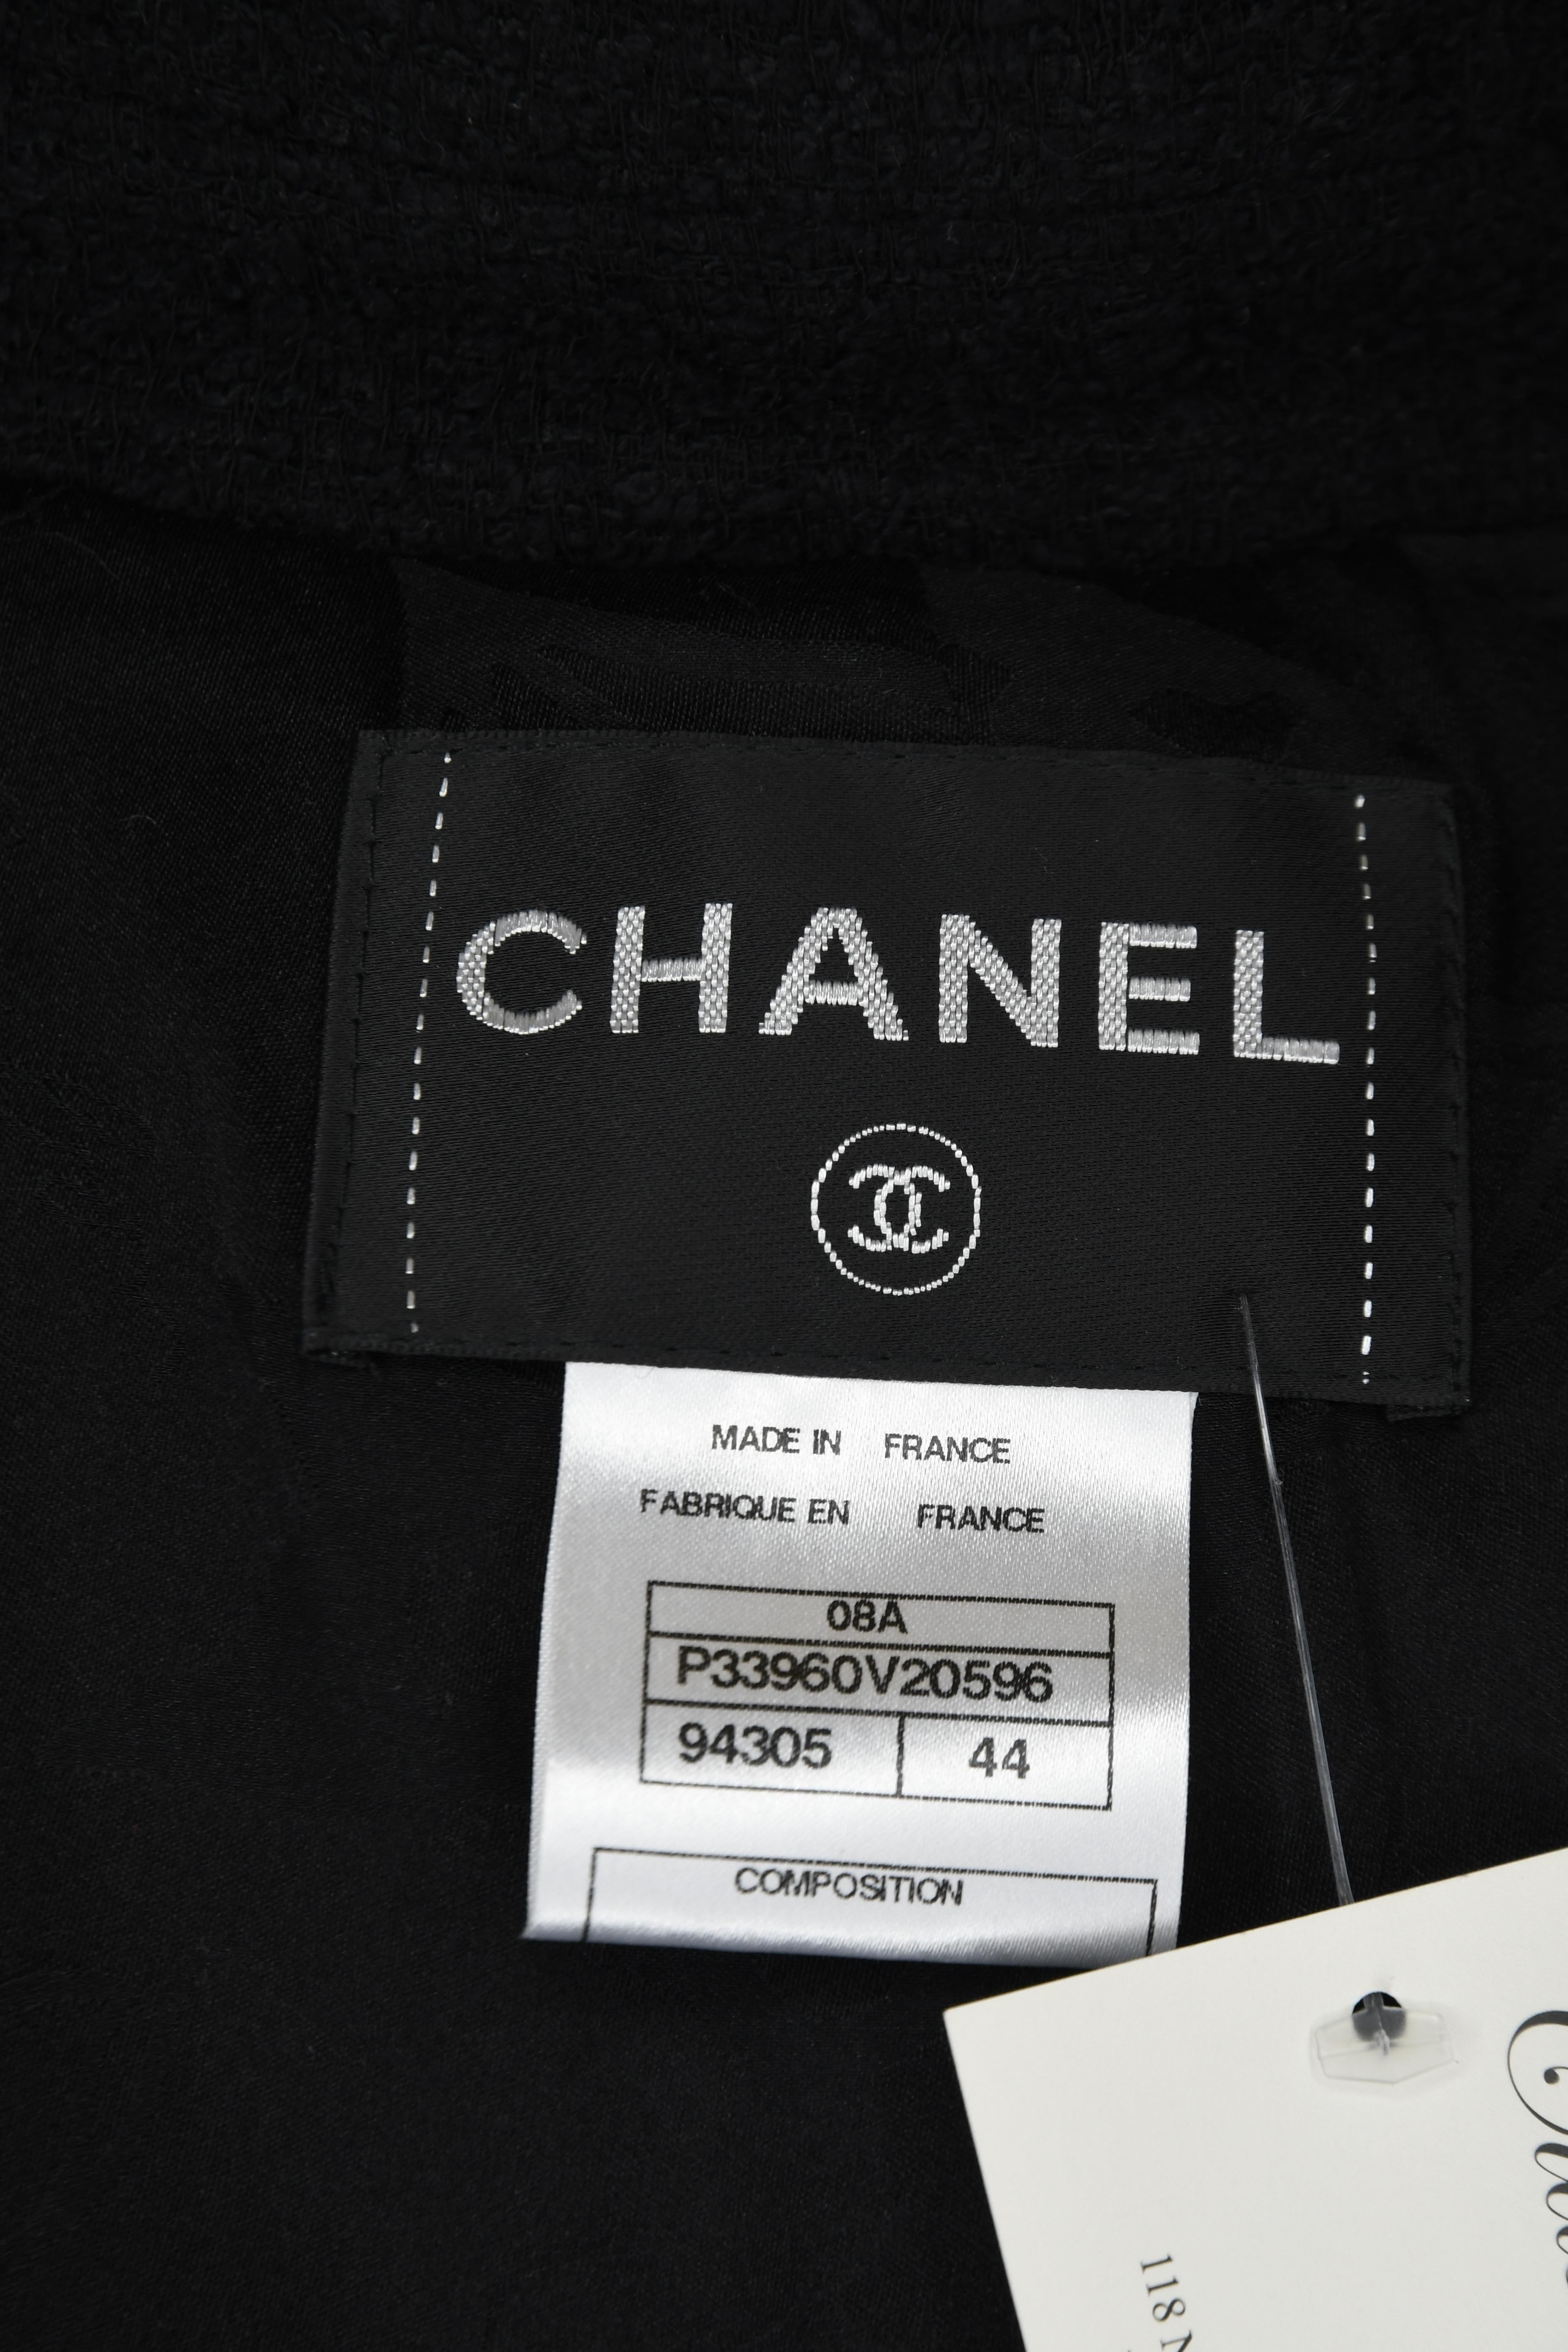 Chanel Black Tweed Top with Jacket Overlay 2008 Runway Collection 44 2